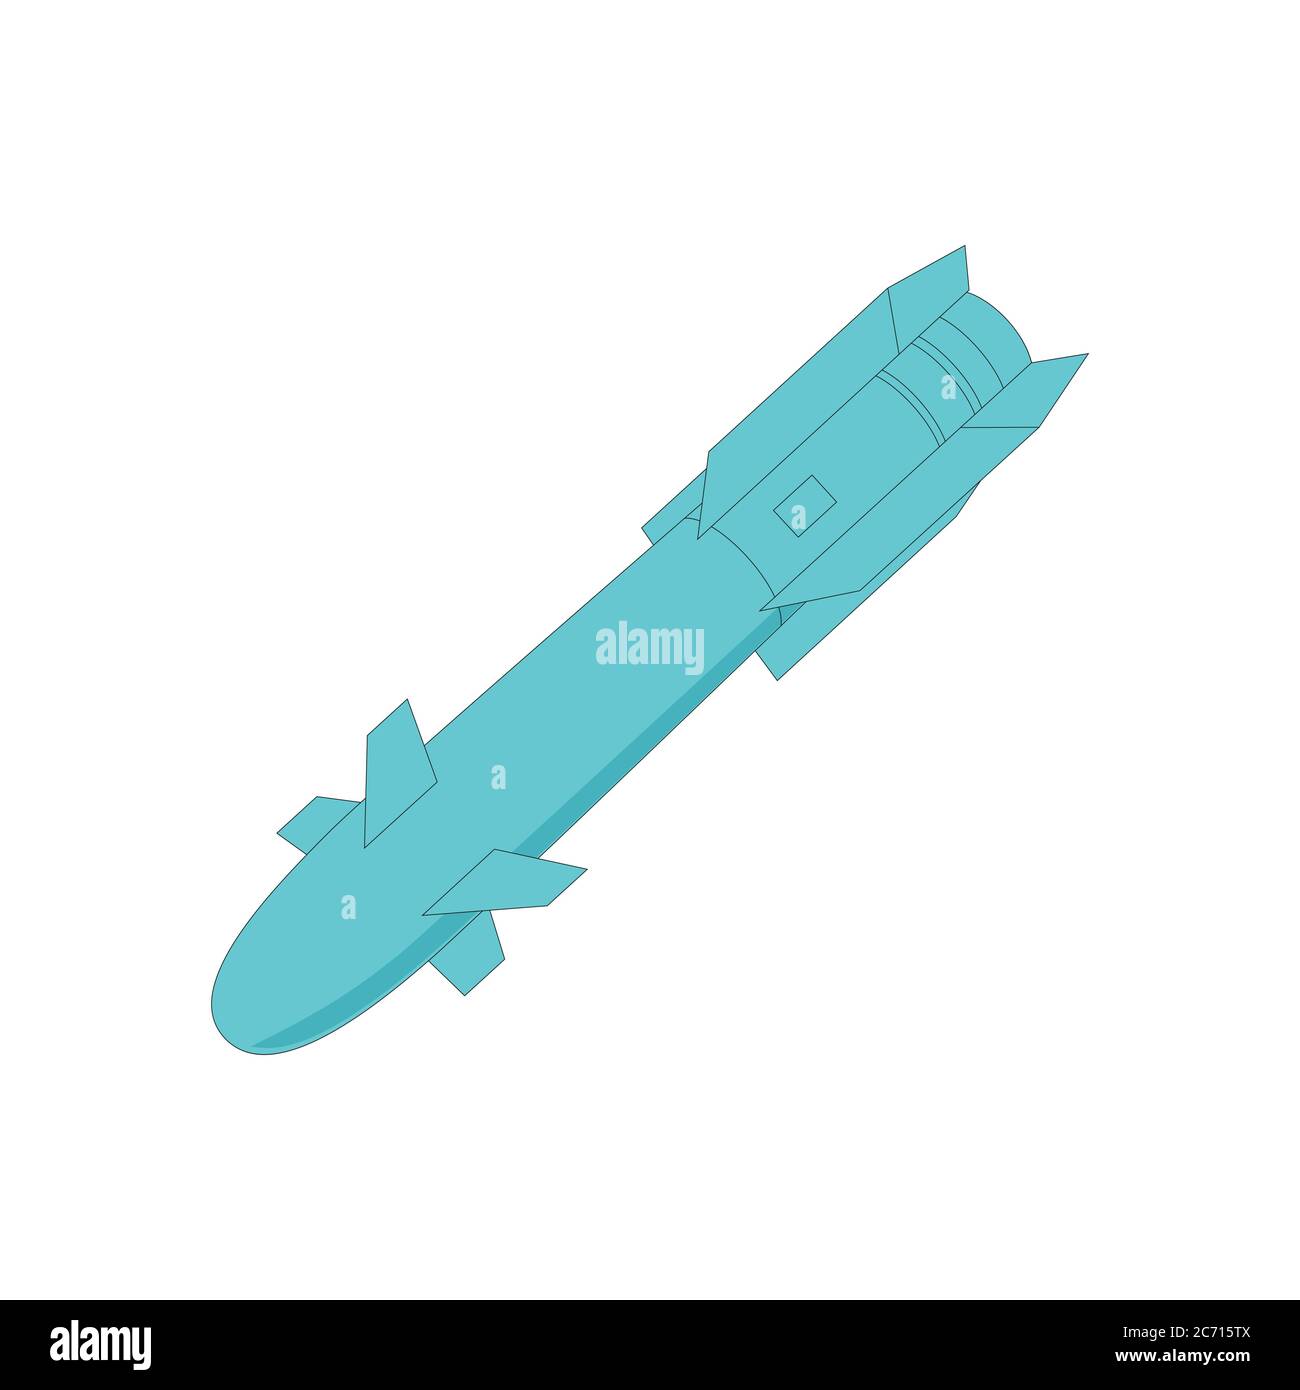 Rakete Rakete Waffe Symbol Vektor Illustration Grafik Design Stock Vektor